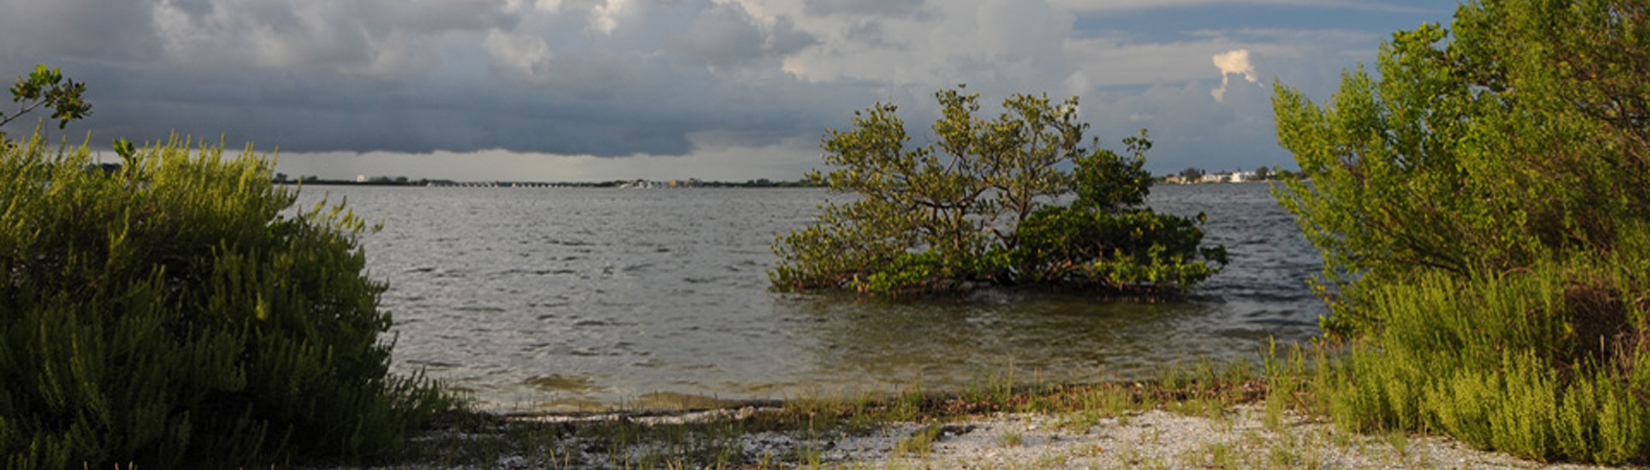 A coastal scene along Lemon Bay in Sarasota County, Florida.